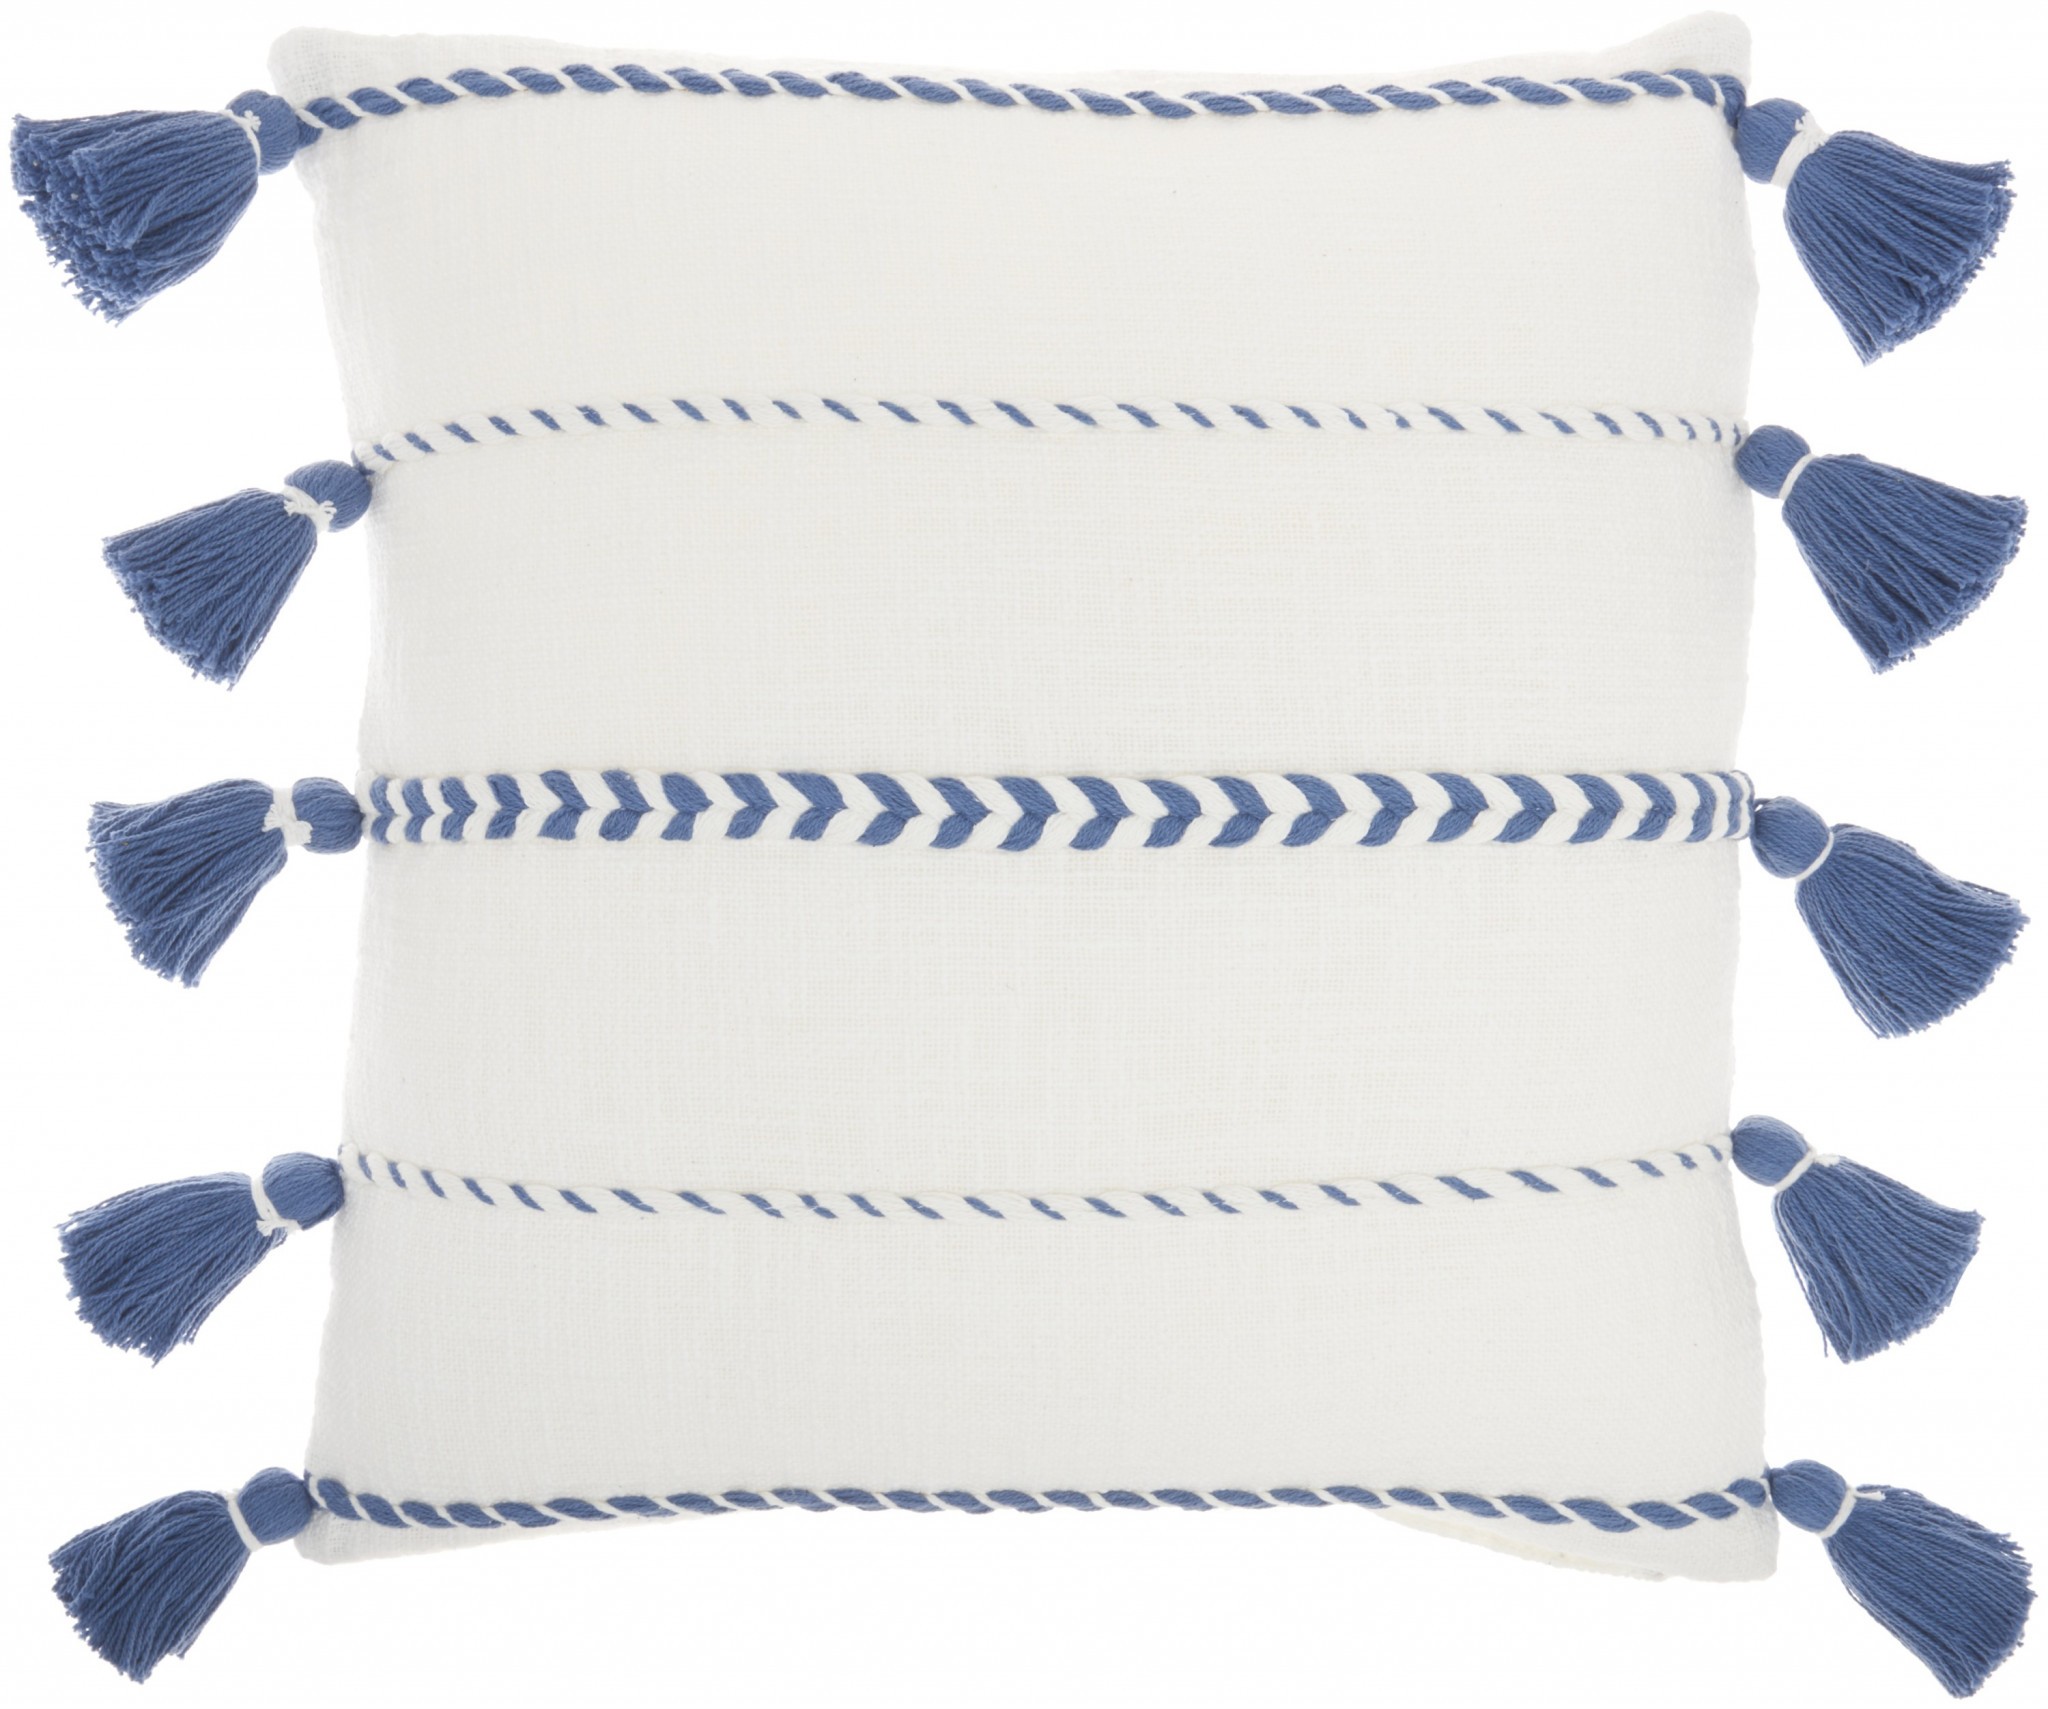 Bohemian White Cotton Accent Pillow with Blue Tassel Details